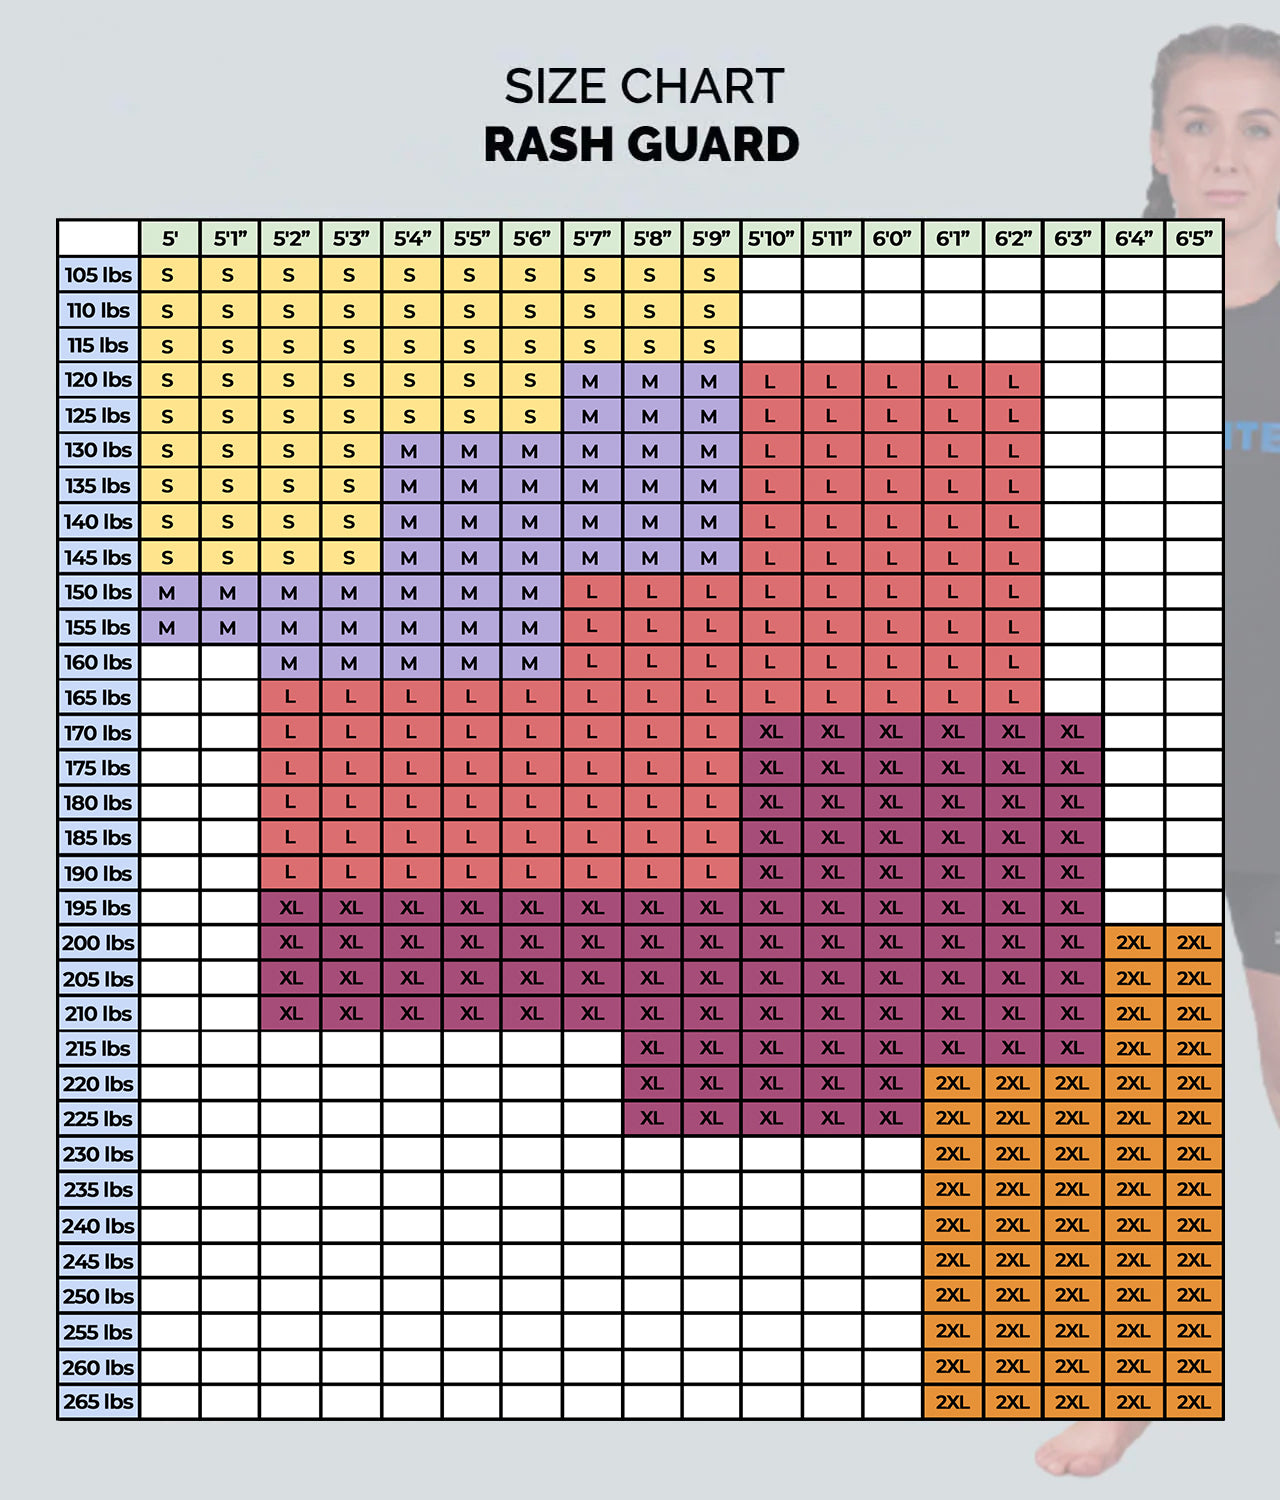 Elite Sports Women's Standard Blue Short Sleeve Jiu Jitsu BJJ Rash Guard Size Guide